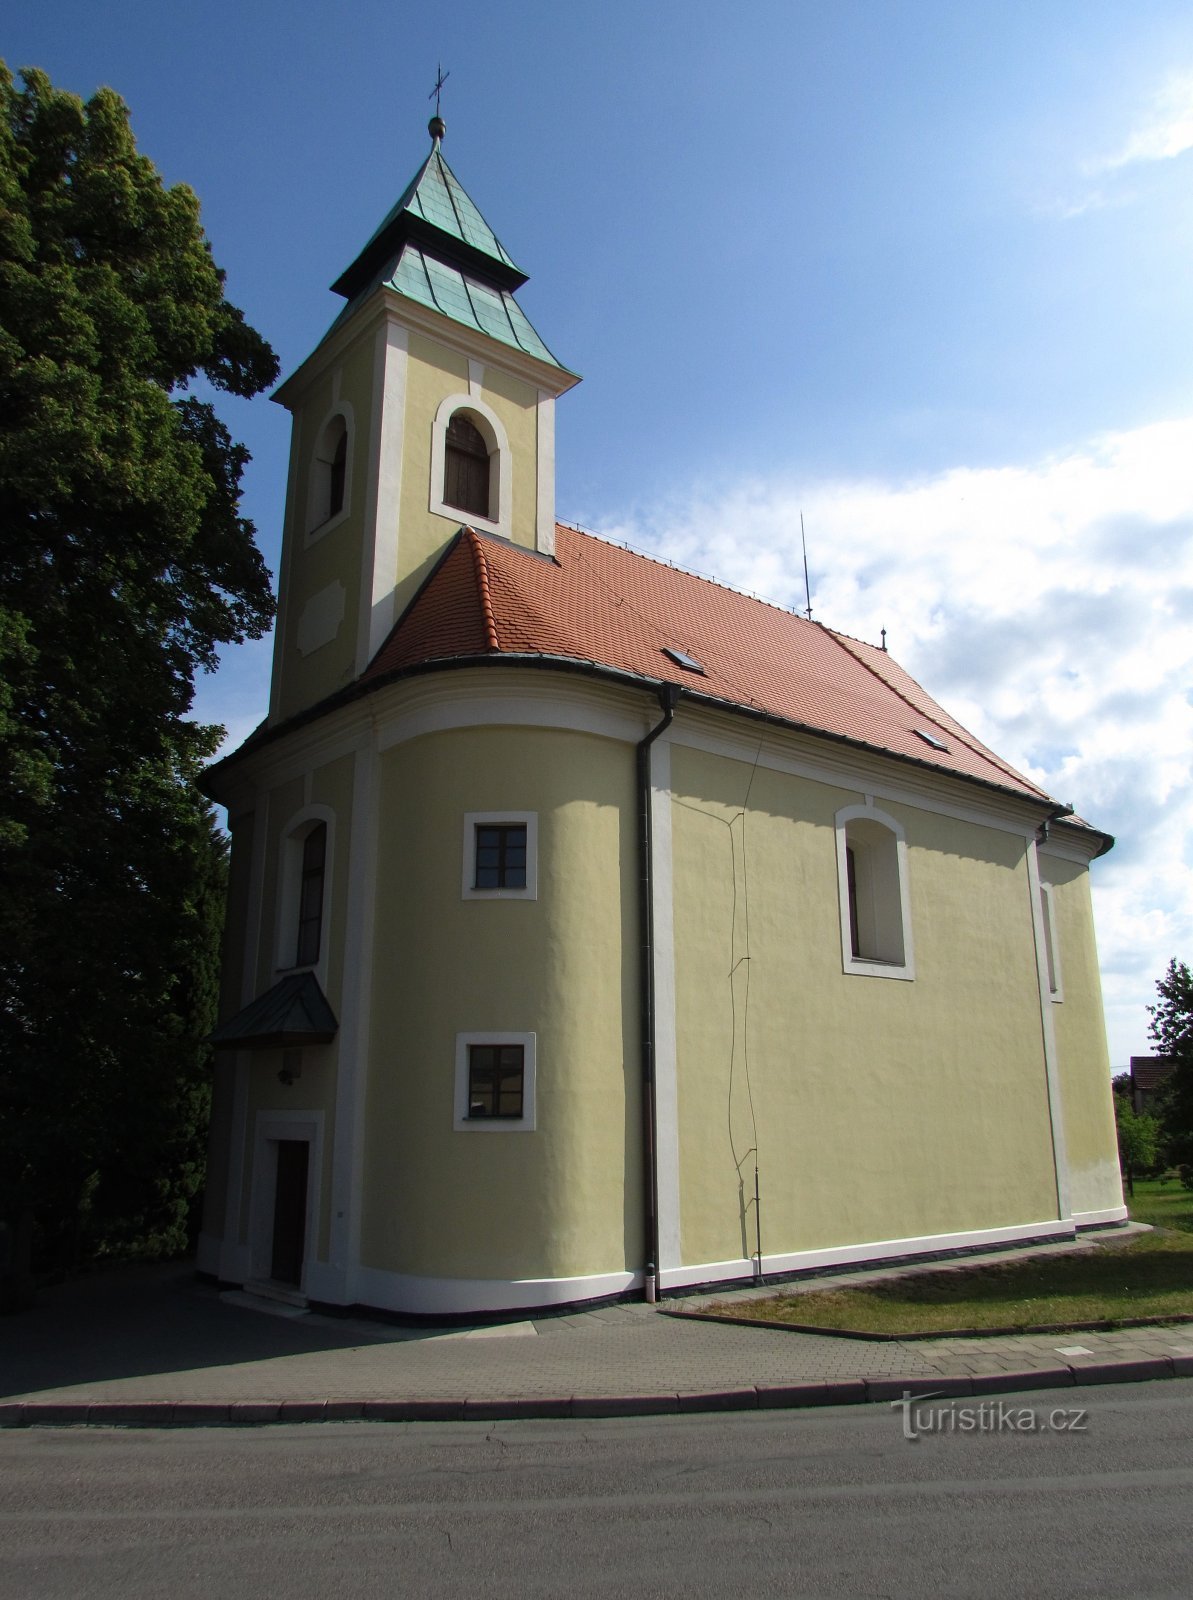 Bukovinka - Εκκλησία της Κοιμήσεως της Θεοτόκου